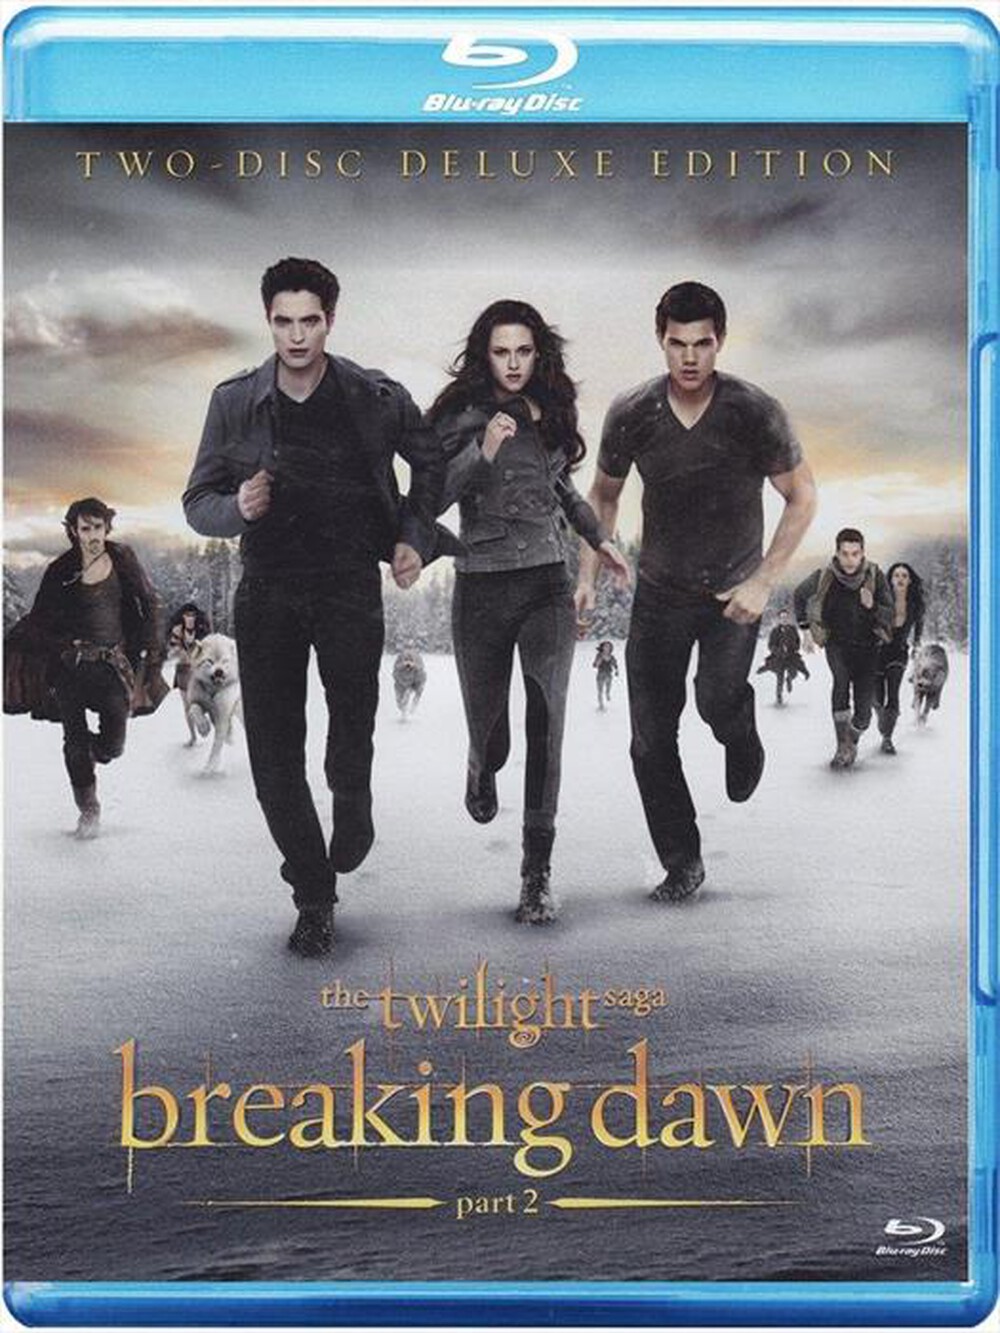 "EAGLE PICTURES - Breaking Dawn - Parte 2 - The Twilight Saga (Del"